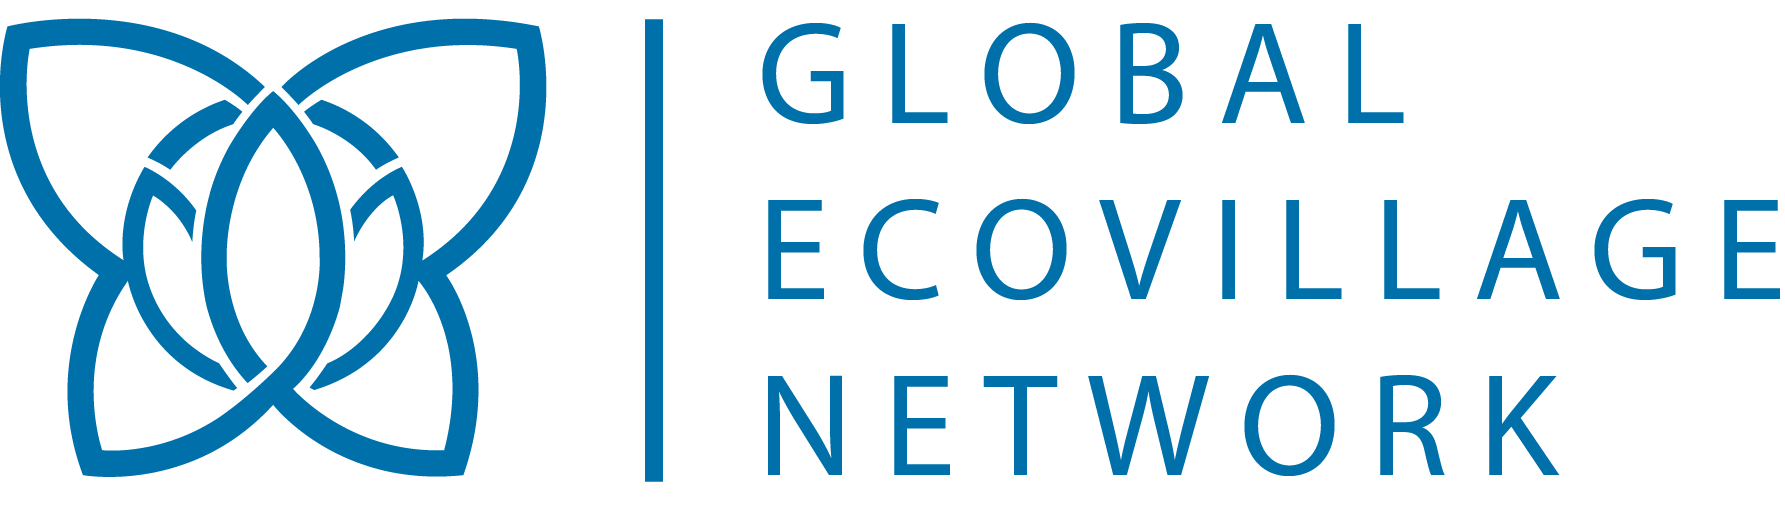 GEN - Global Ecovillage Network no LinkedIn: #ecovillage